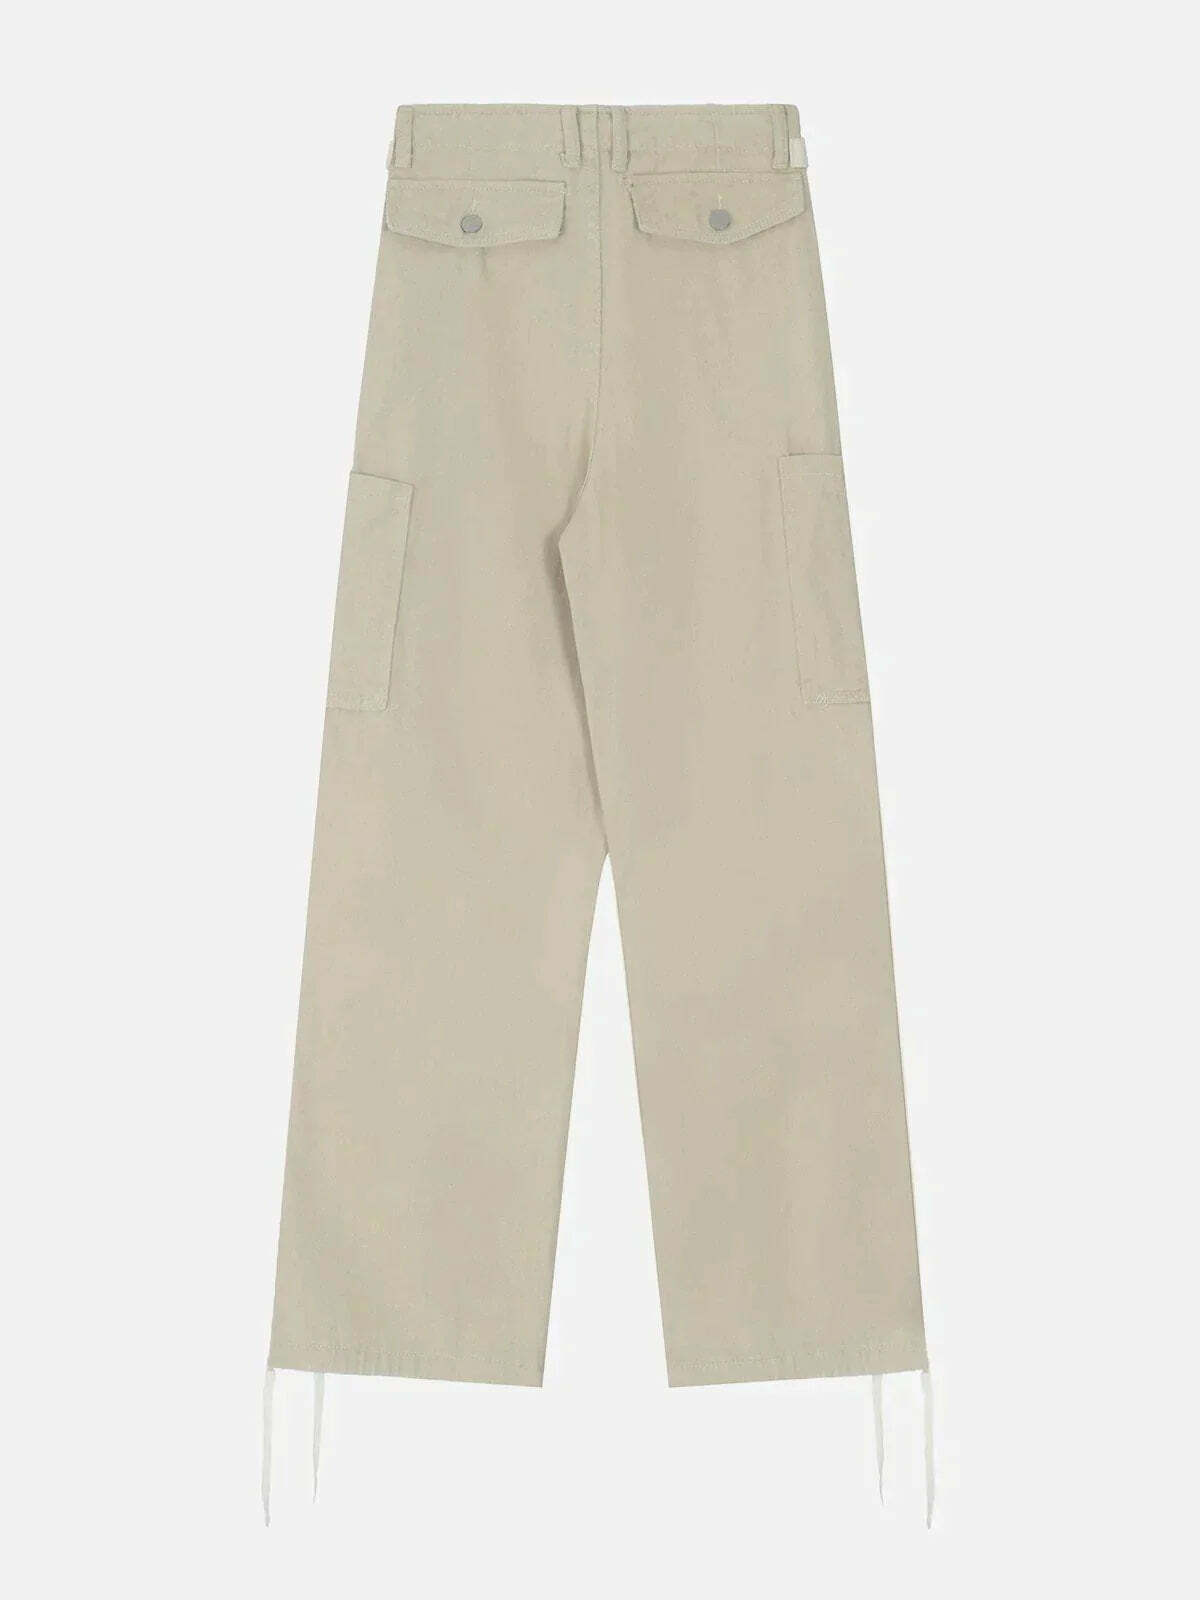 retro wideleg cargo pants edgy & functional streetwear 1161